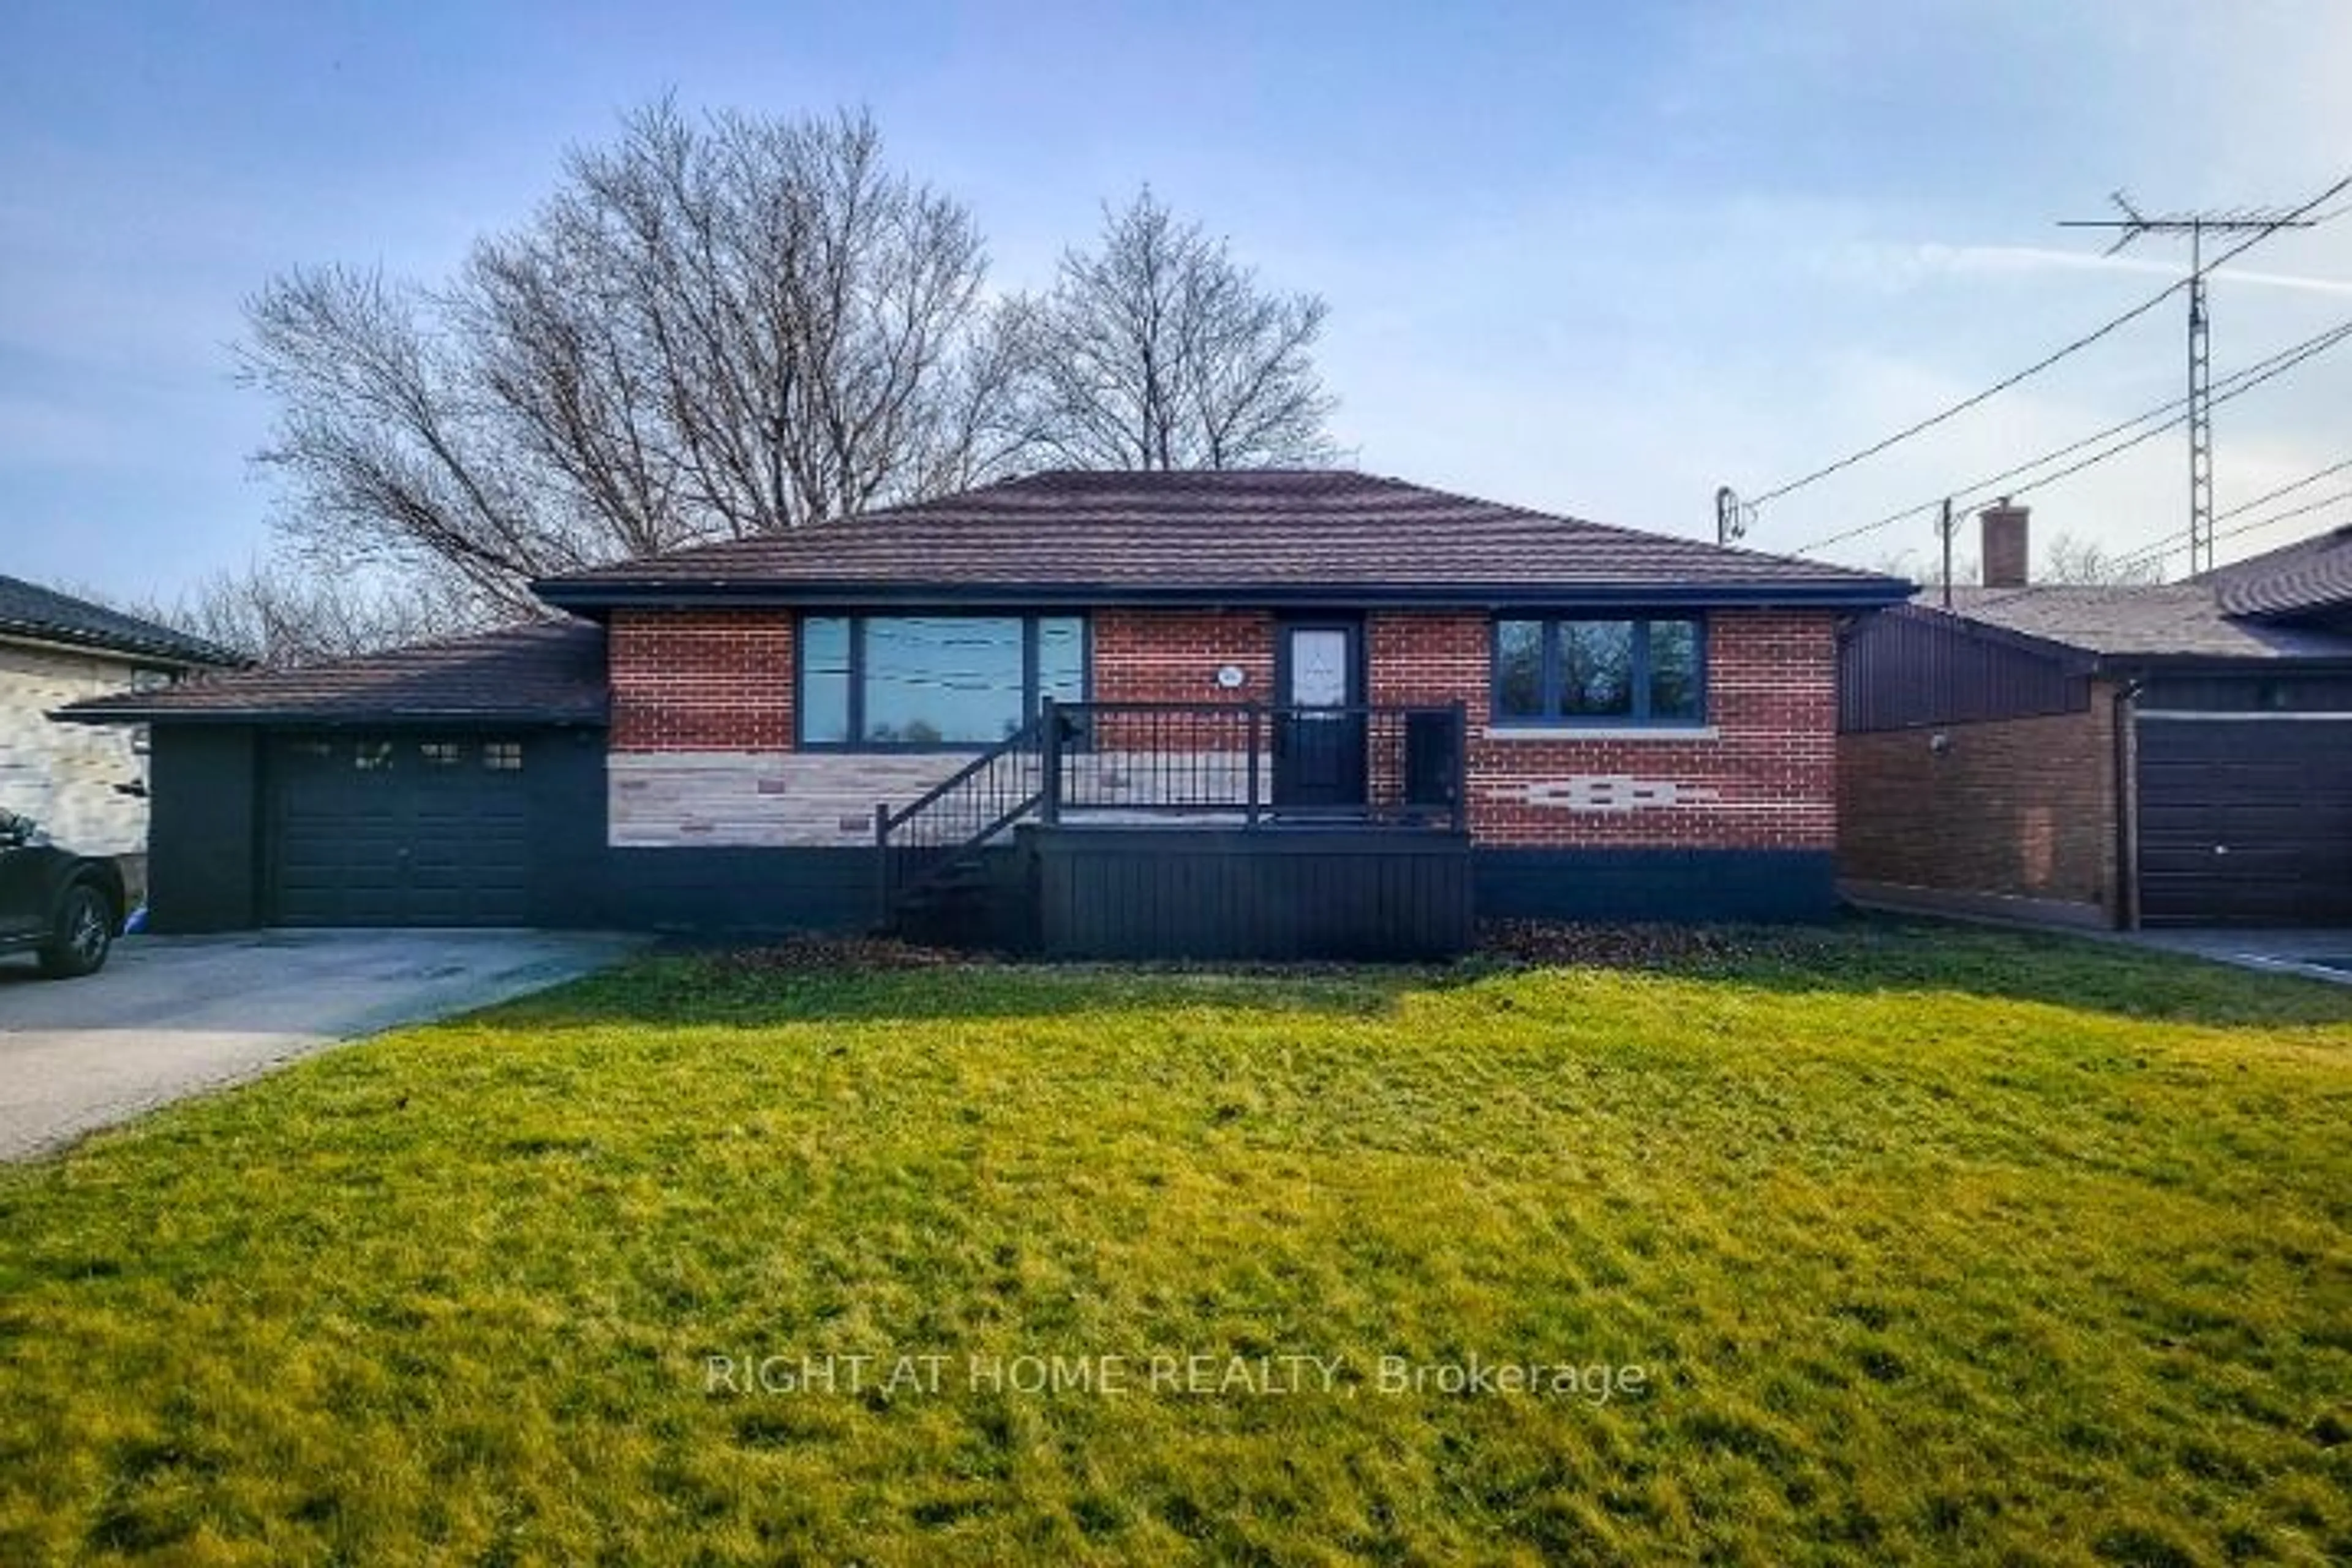 Home with brick exterior material for 996 Barton St, Hamilton Ontario L8E 5H3